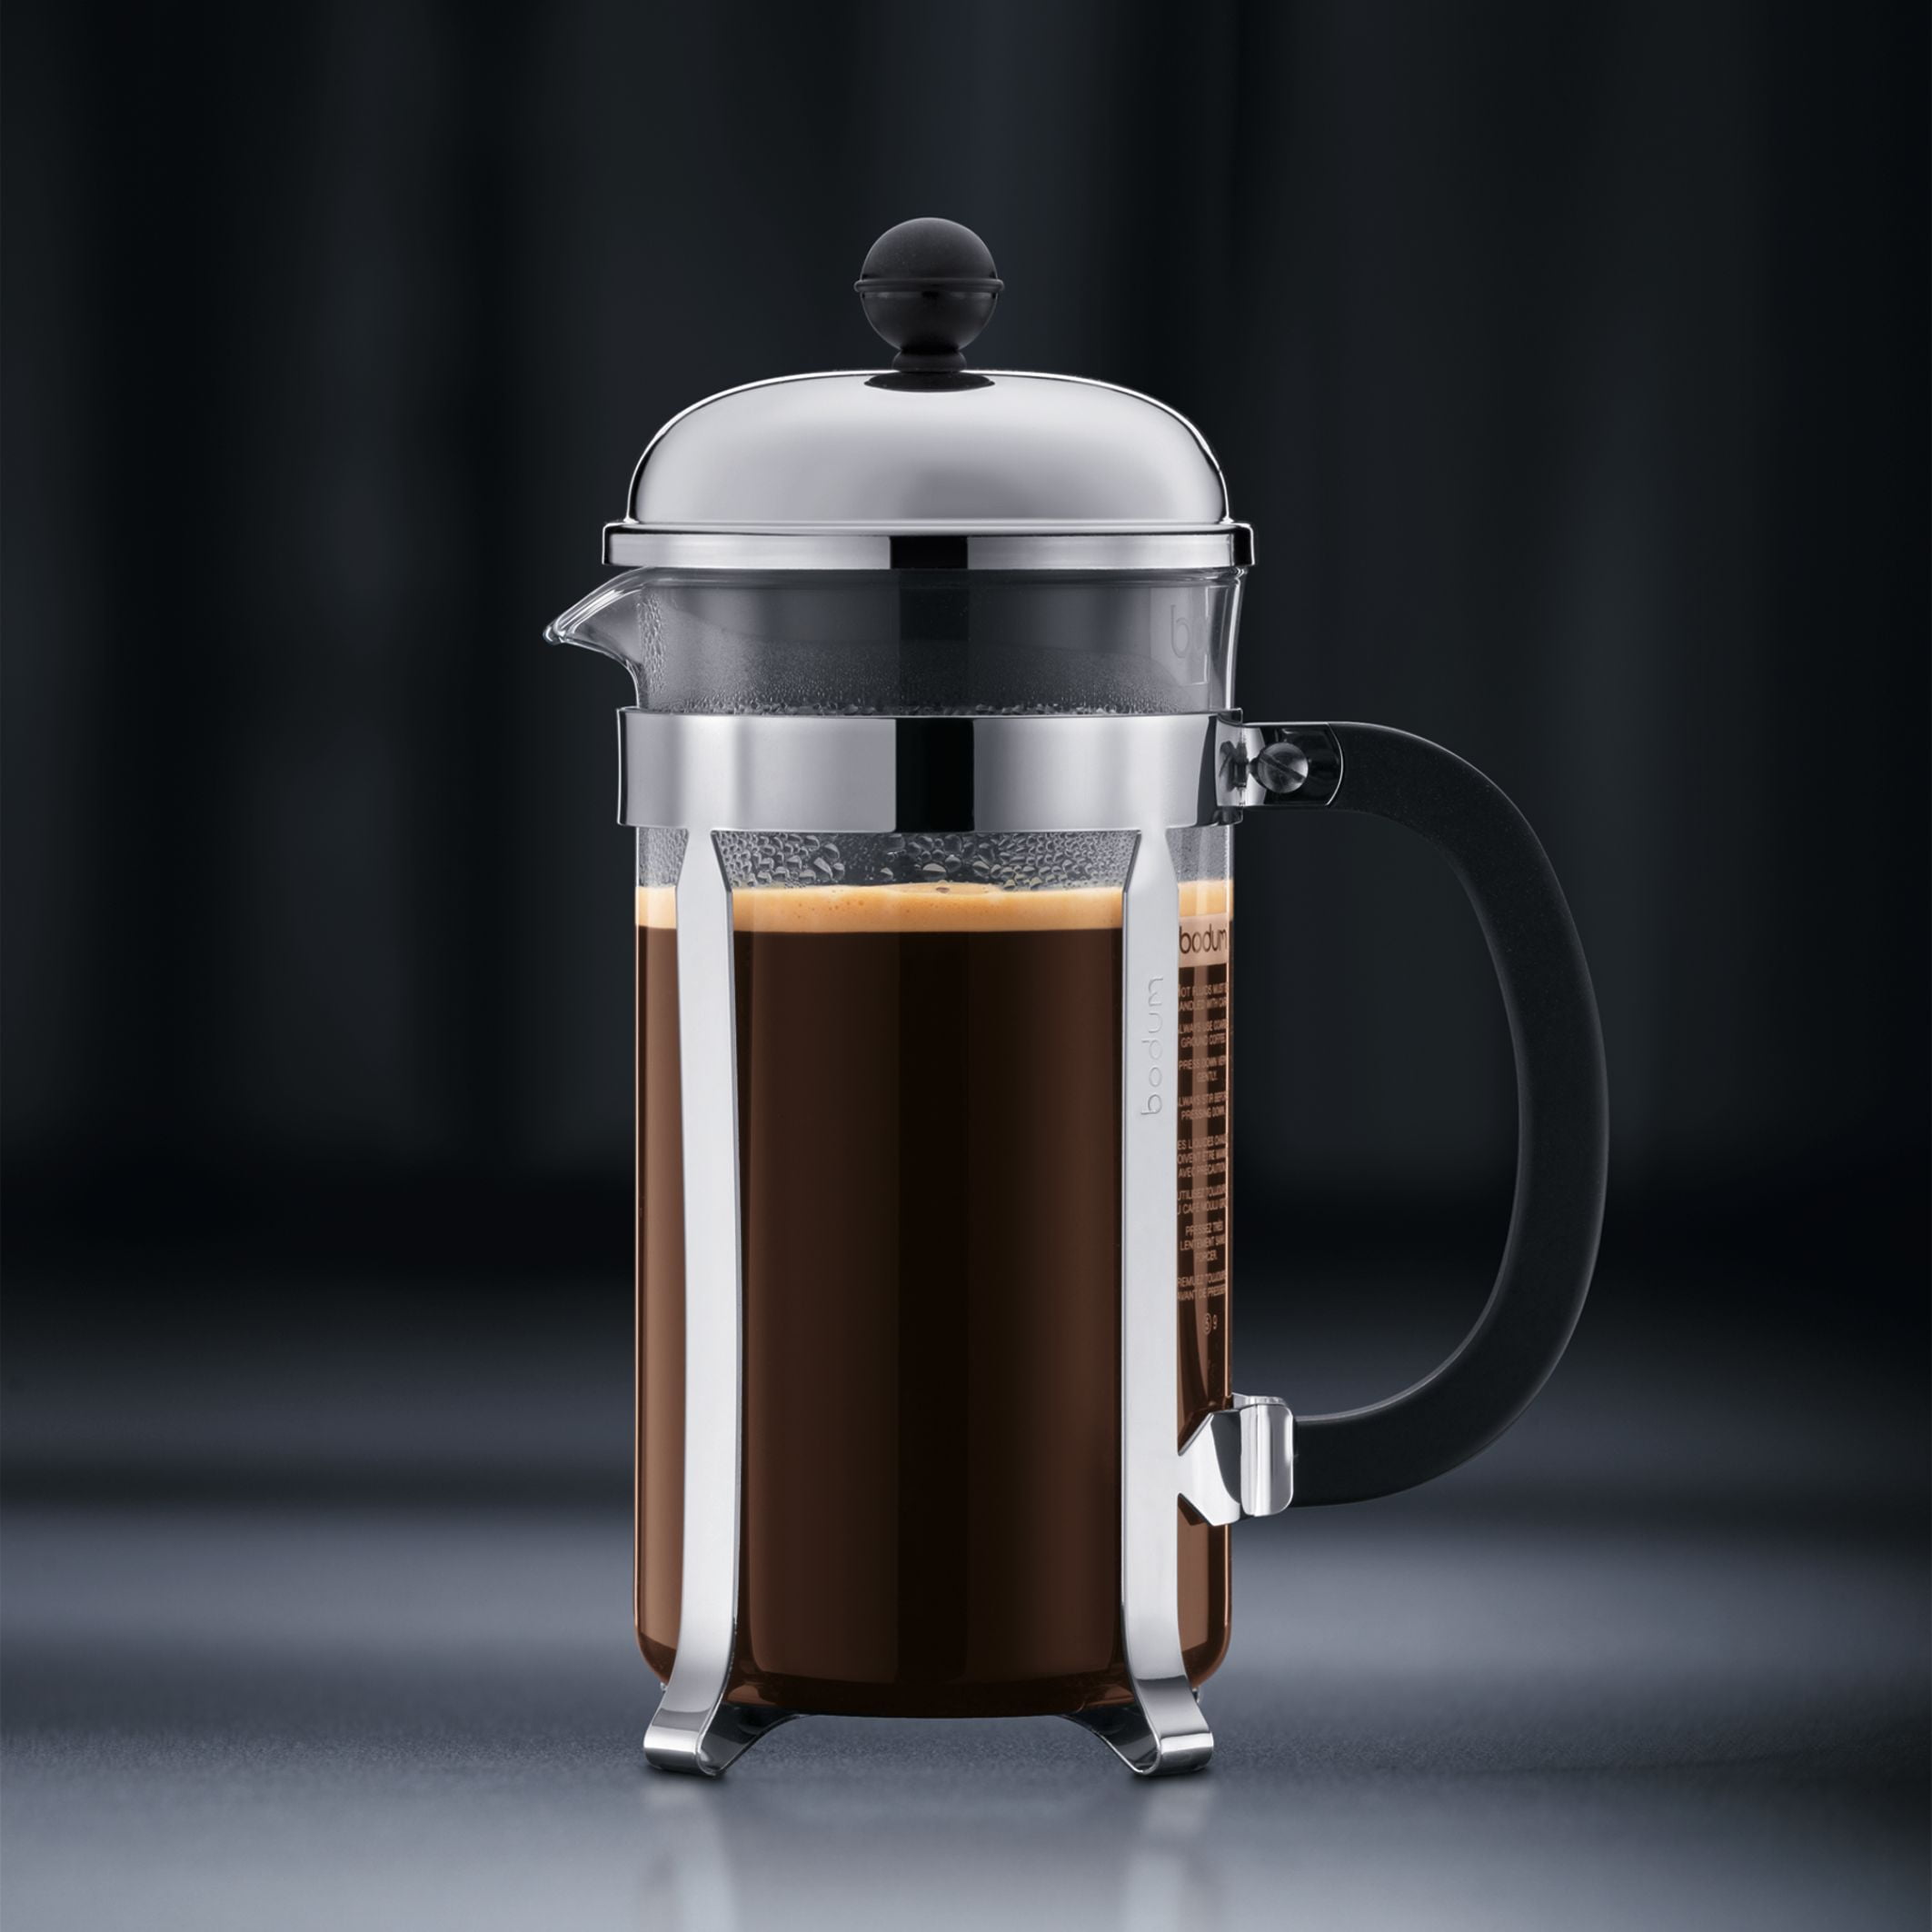  Bodum Brazil French Press Coffee Maker, 1.5 Liter, 51 Ounce,  Black: Home & Kitchen